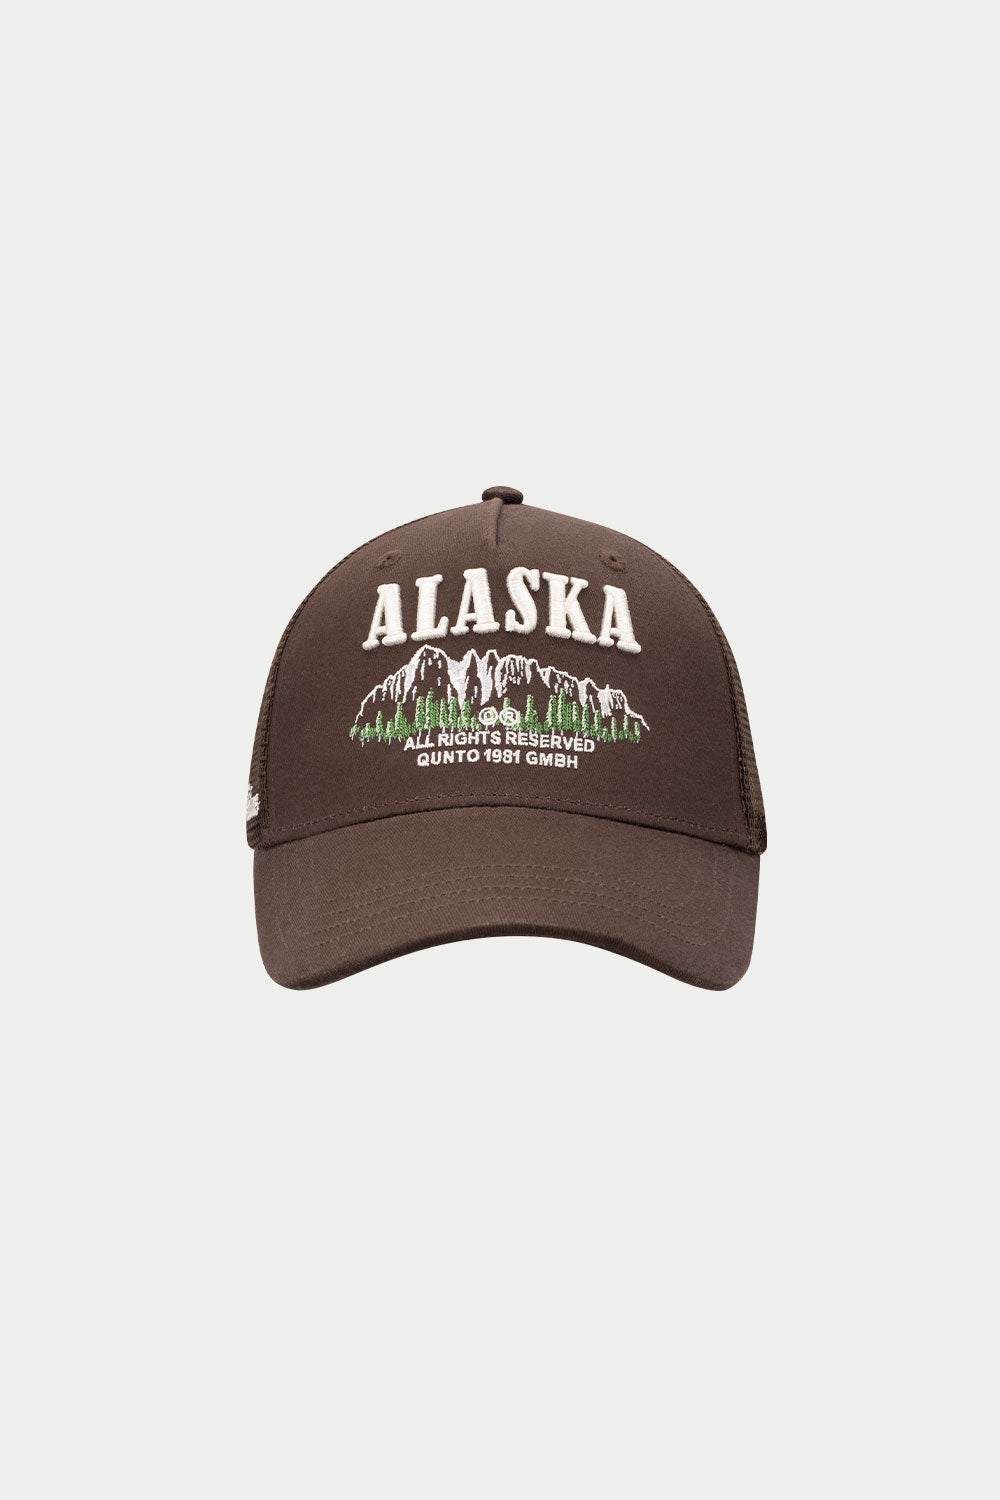 ALASKA FORESIGHT TRUCKER  BROWN